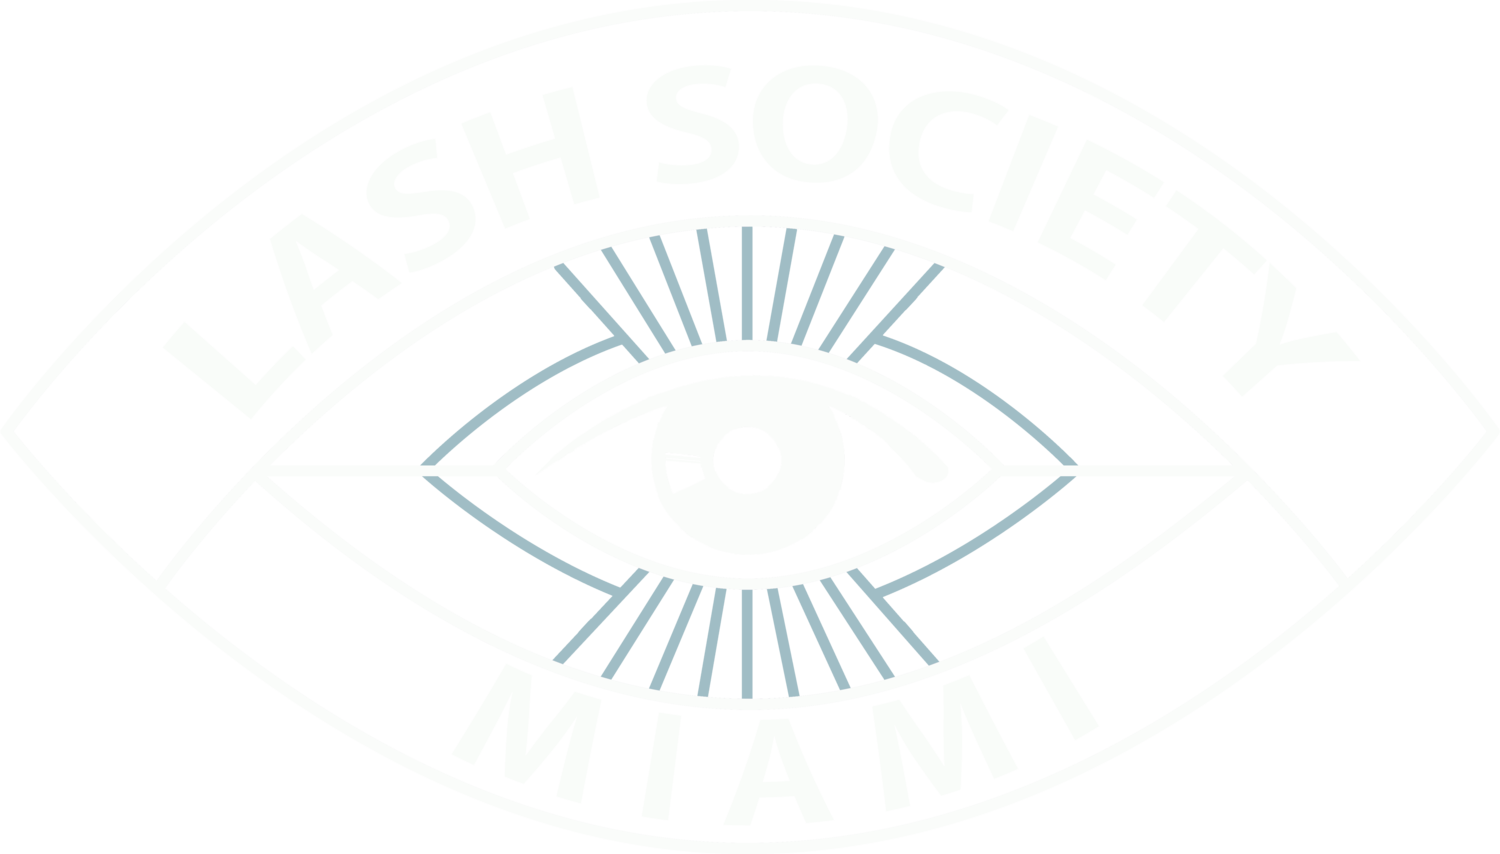 Lash Society Miami